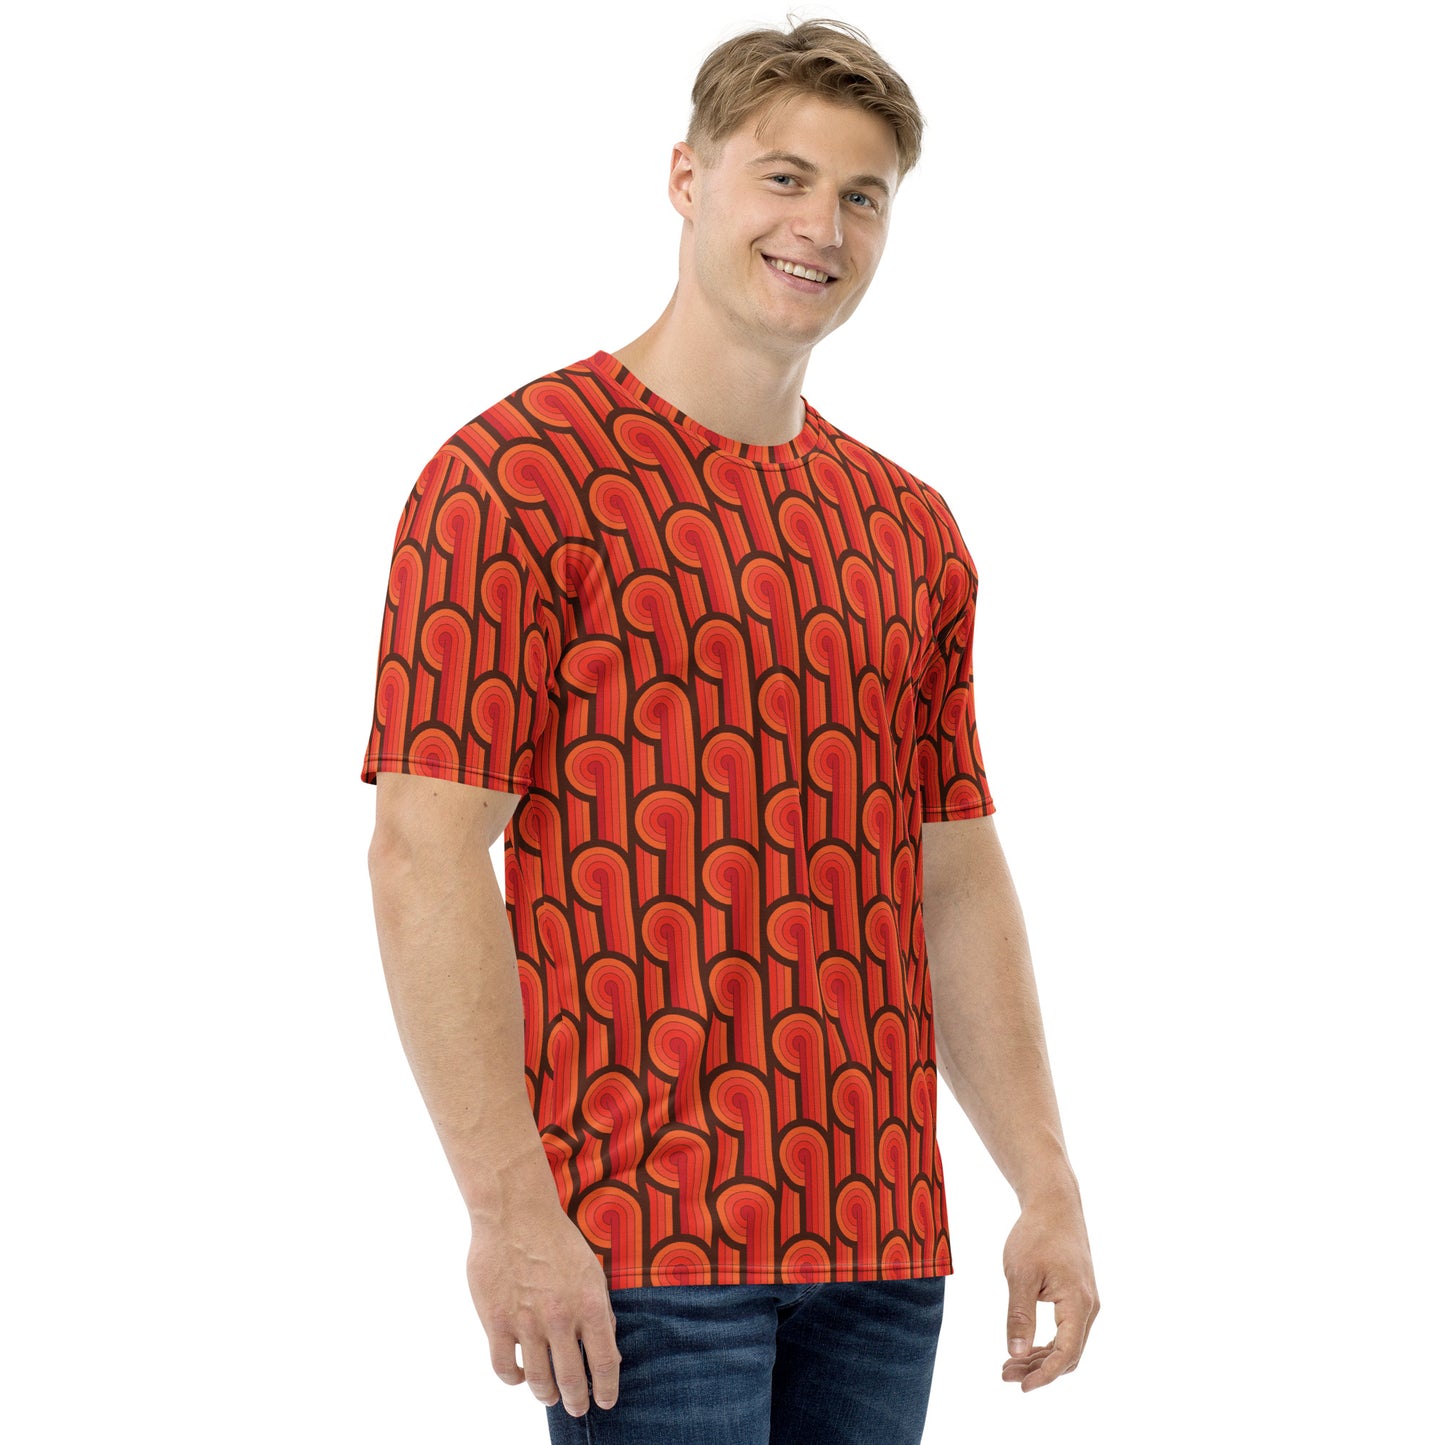 Groovy Men Tshirt, Geometric Retro Red Brown 70s Designer Graphic Aesthetic Fashion Crewneck Tee Top Gift Shirt Starcove Fashion